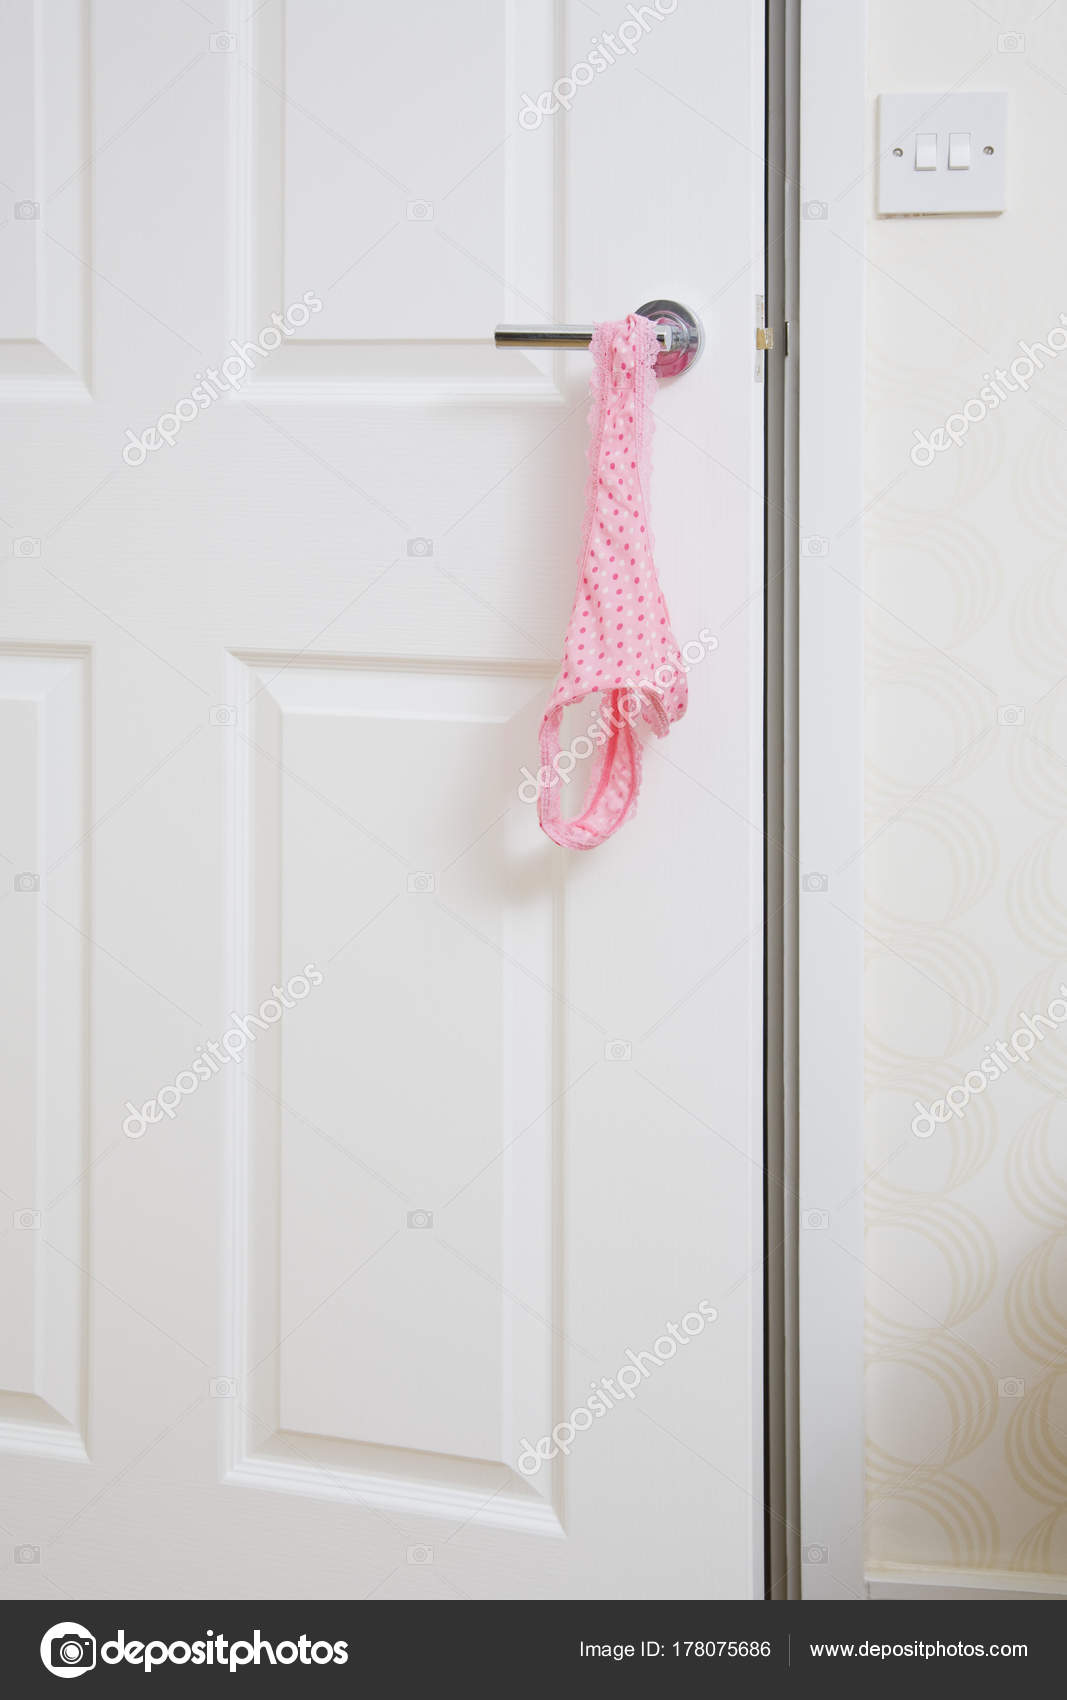 Red Knickers Hanging Off a Bedroom Door Handle Stock Photo - Image of  knickers, vertical: 82660126